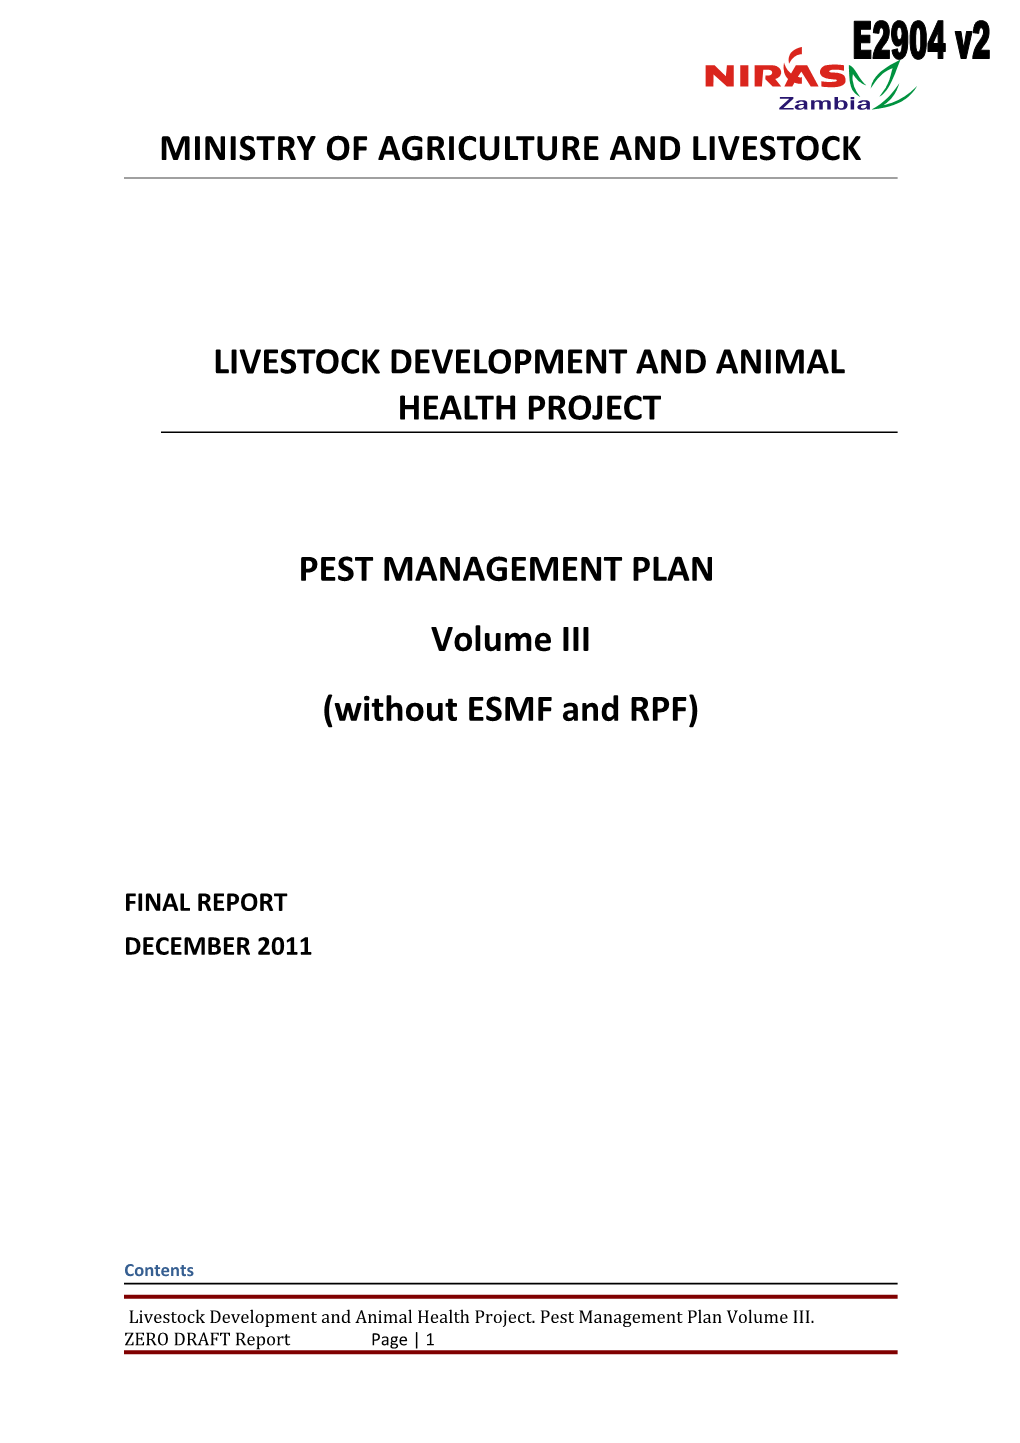 Livestock Development and Animal Health Project